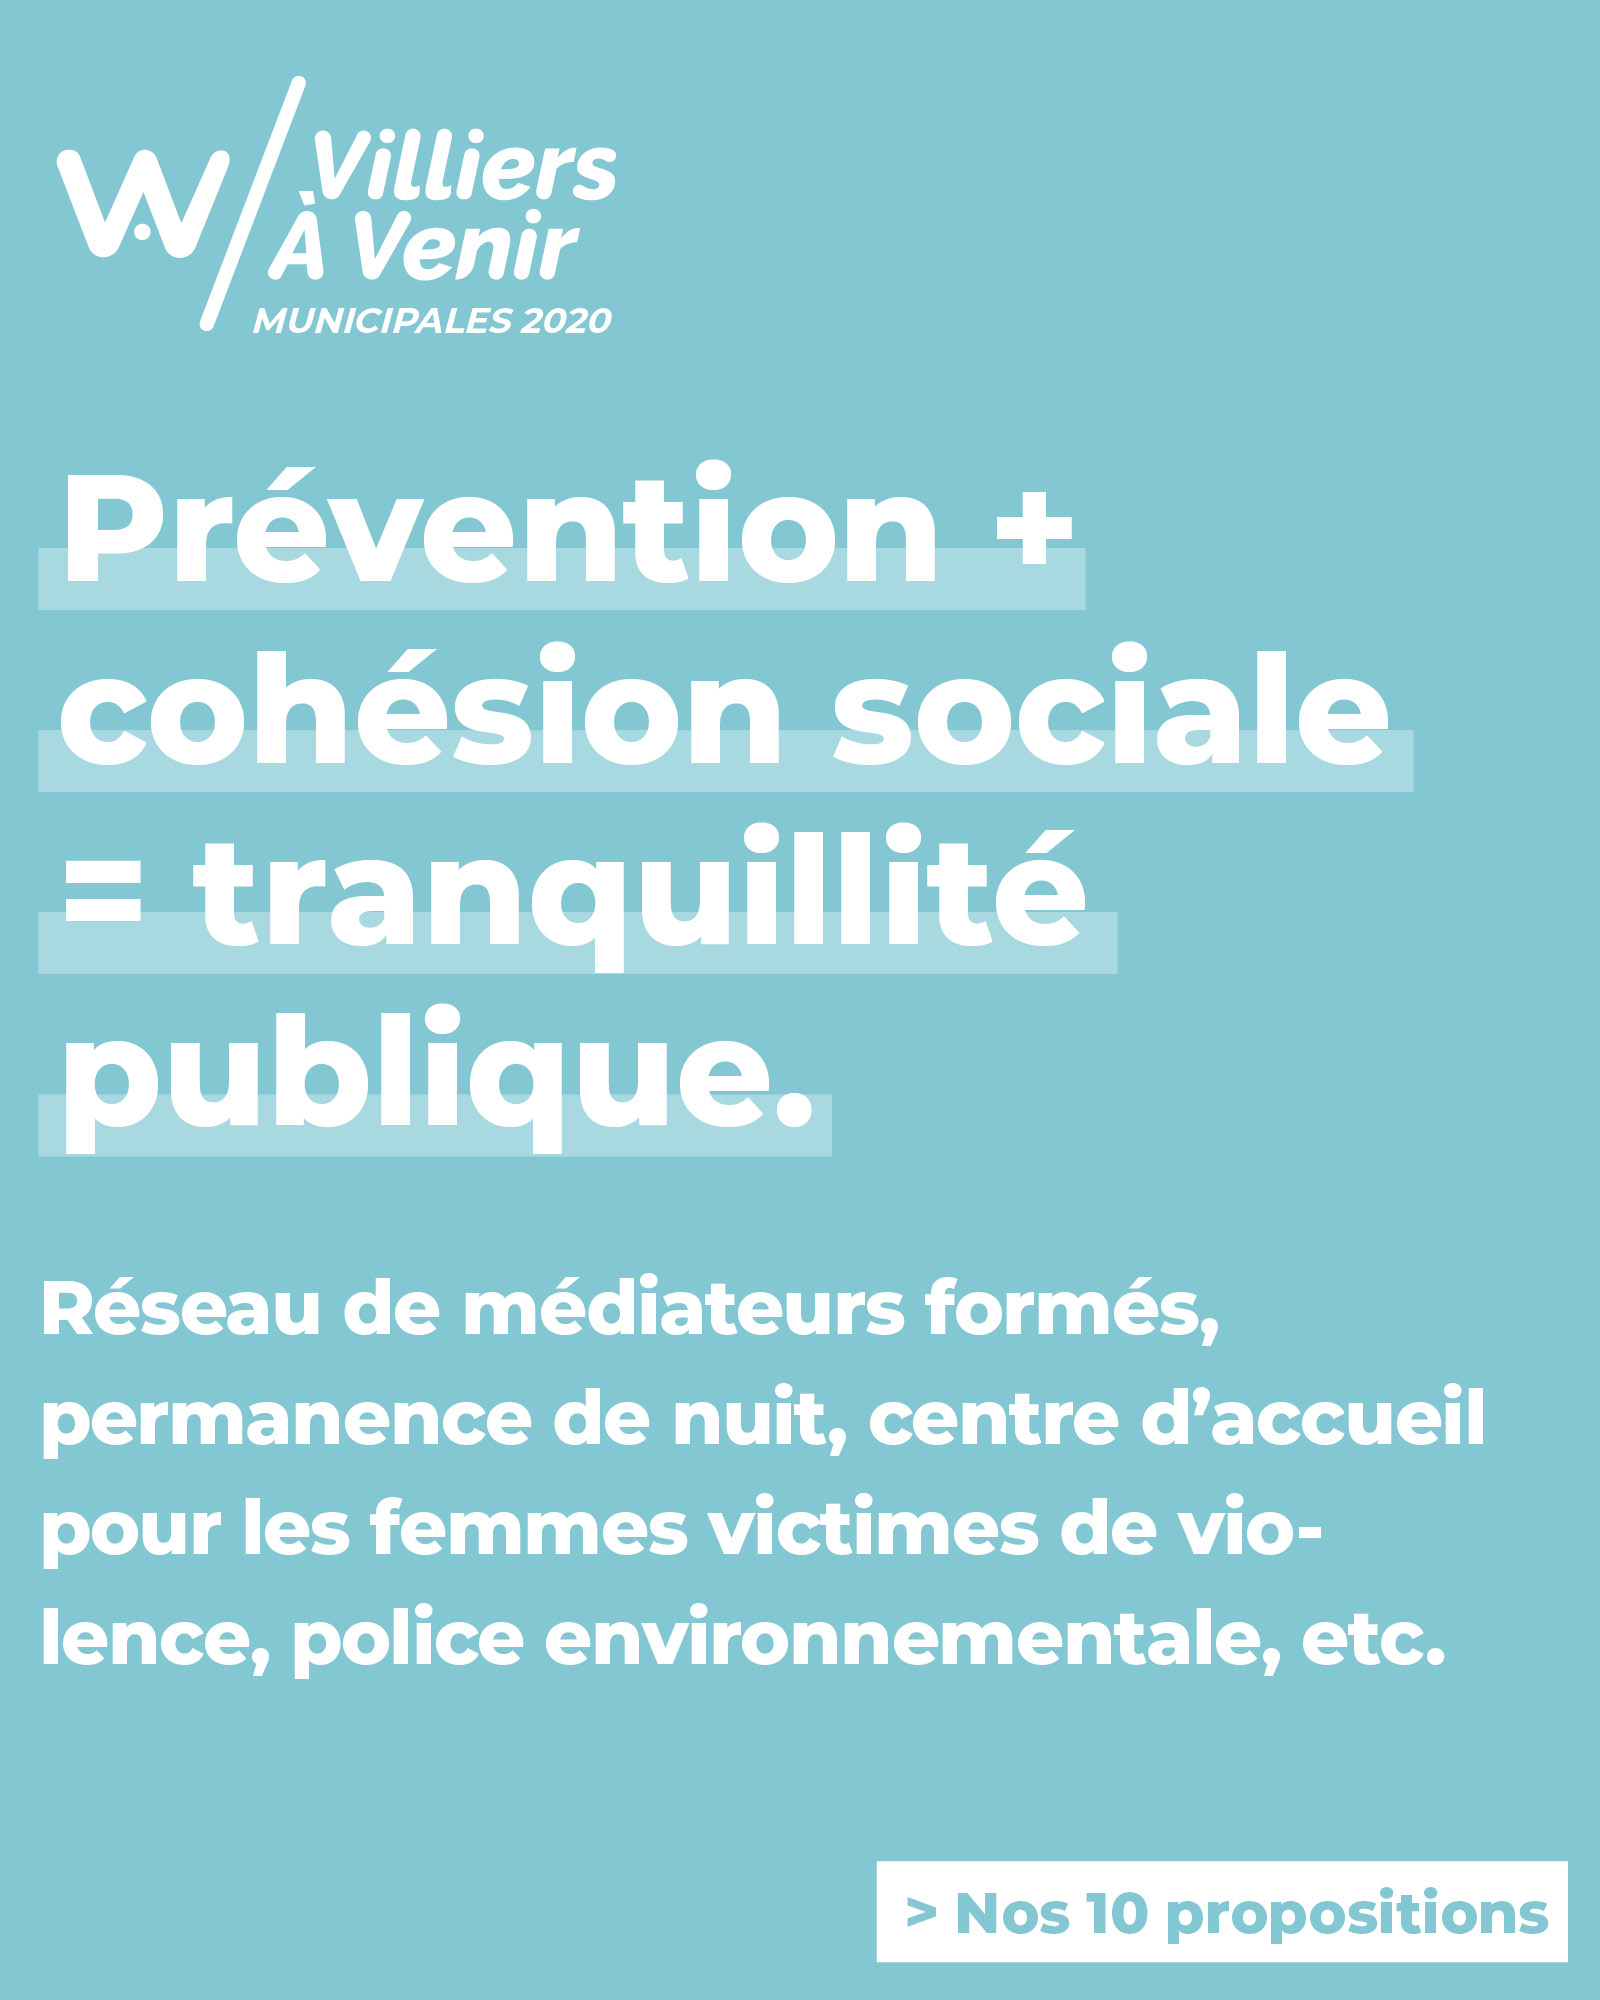 https://vav94.fr/wp-content/uploads/2020/02/SECURITE-VILLIERS-SUR-MARNE-PREVENTION-TRANQUILLITE-PUBLIQUE-VAV-MUNICIPALES-2020.jpg